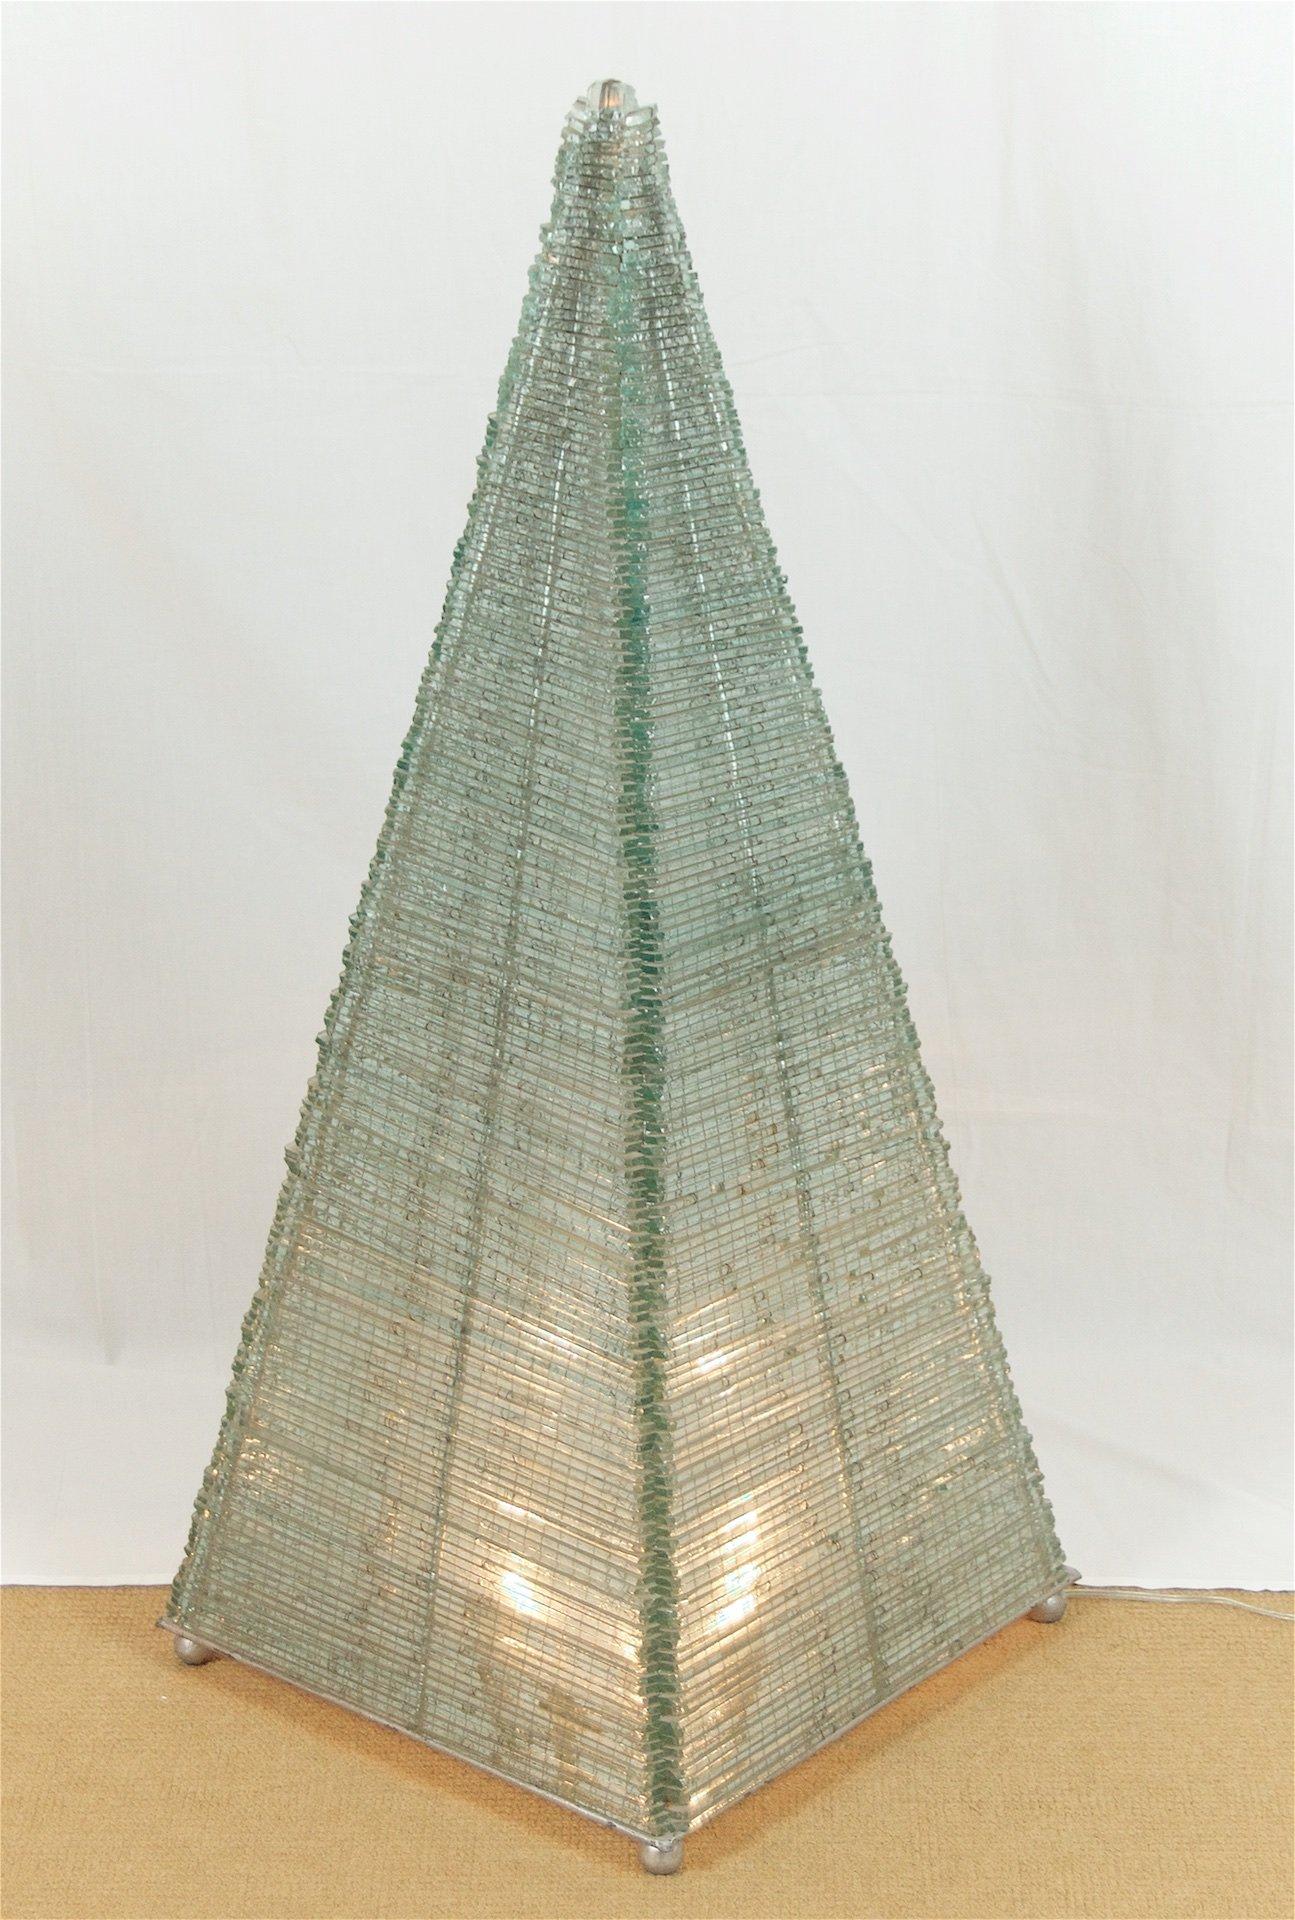 glass pyramid light